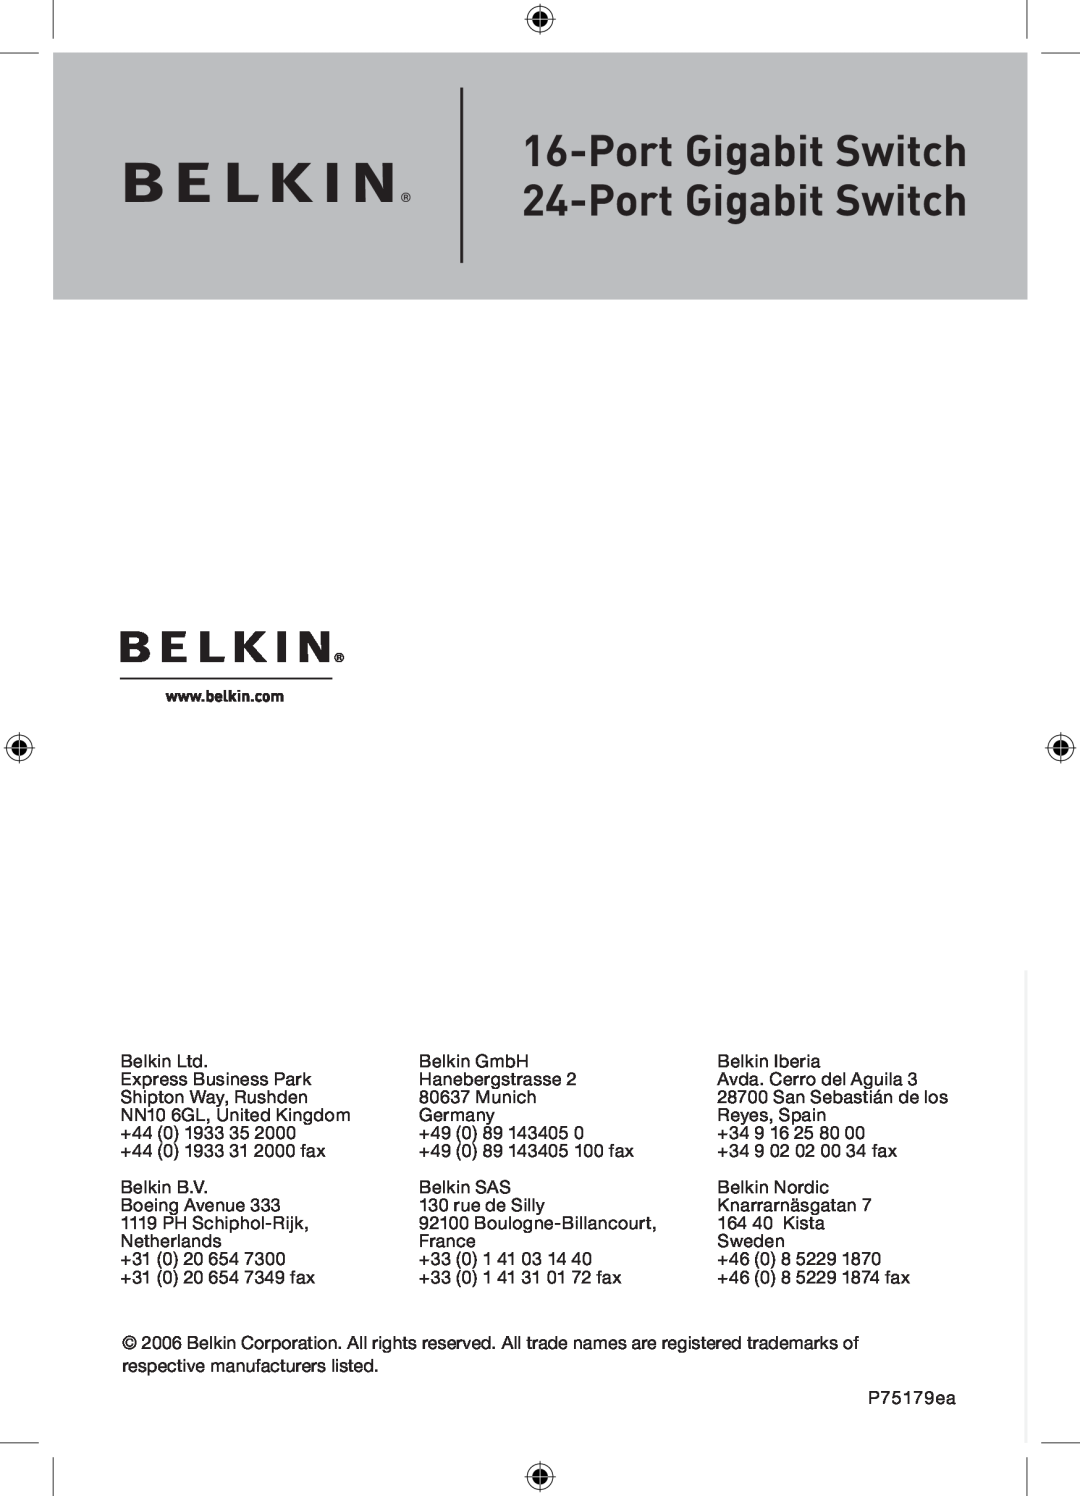 Belkin P75179ea manual Port Gigabit Switch 24-Port Gigabit Switch 